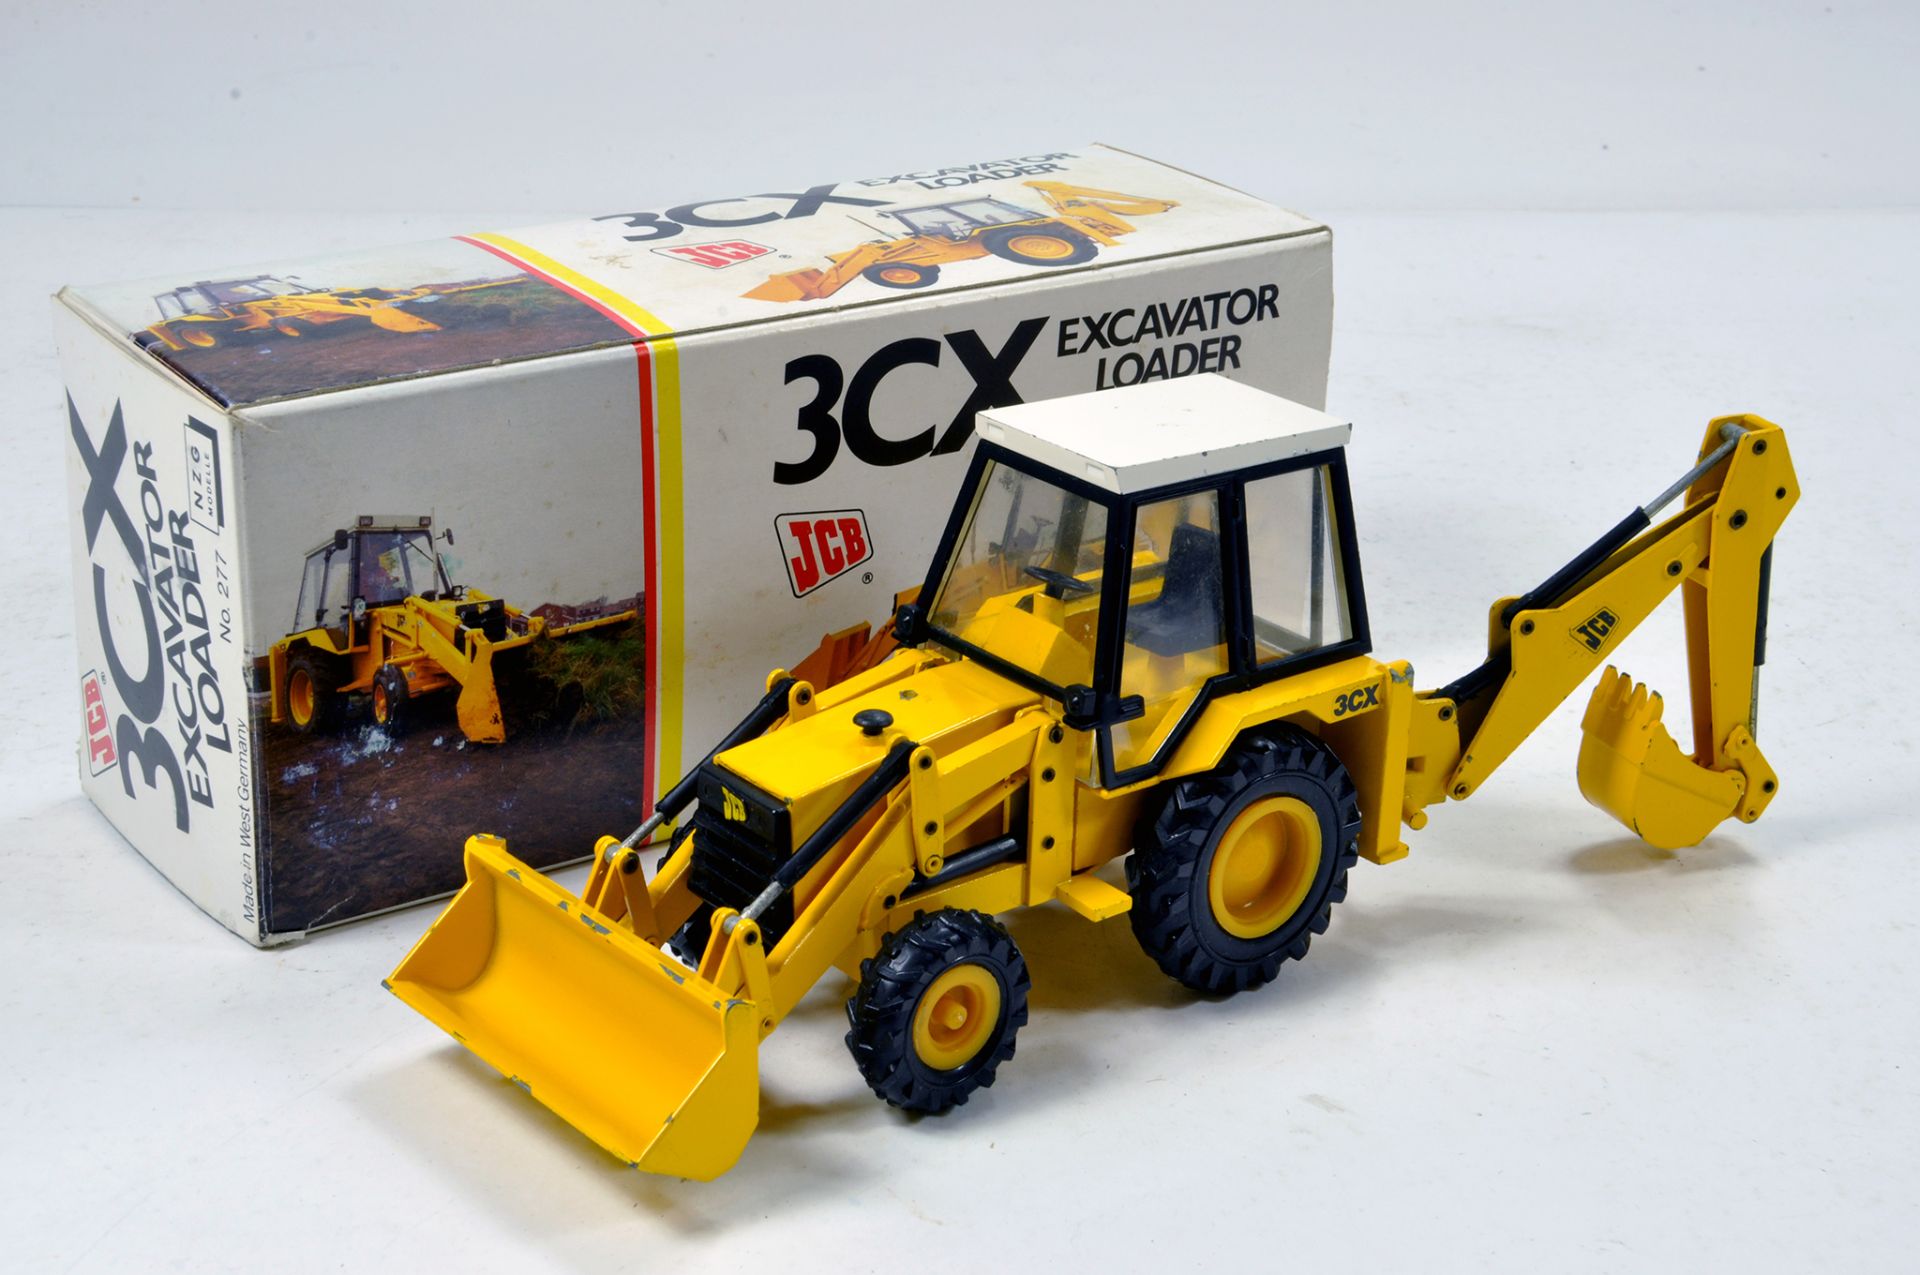 NZG 1/35 Diecast Construction Issue Comprising JCB 3CX Excavator Loader. Generally VG (missing